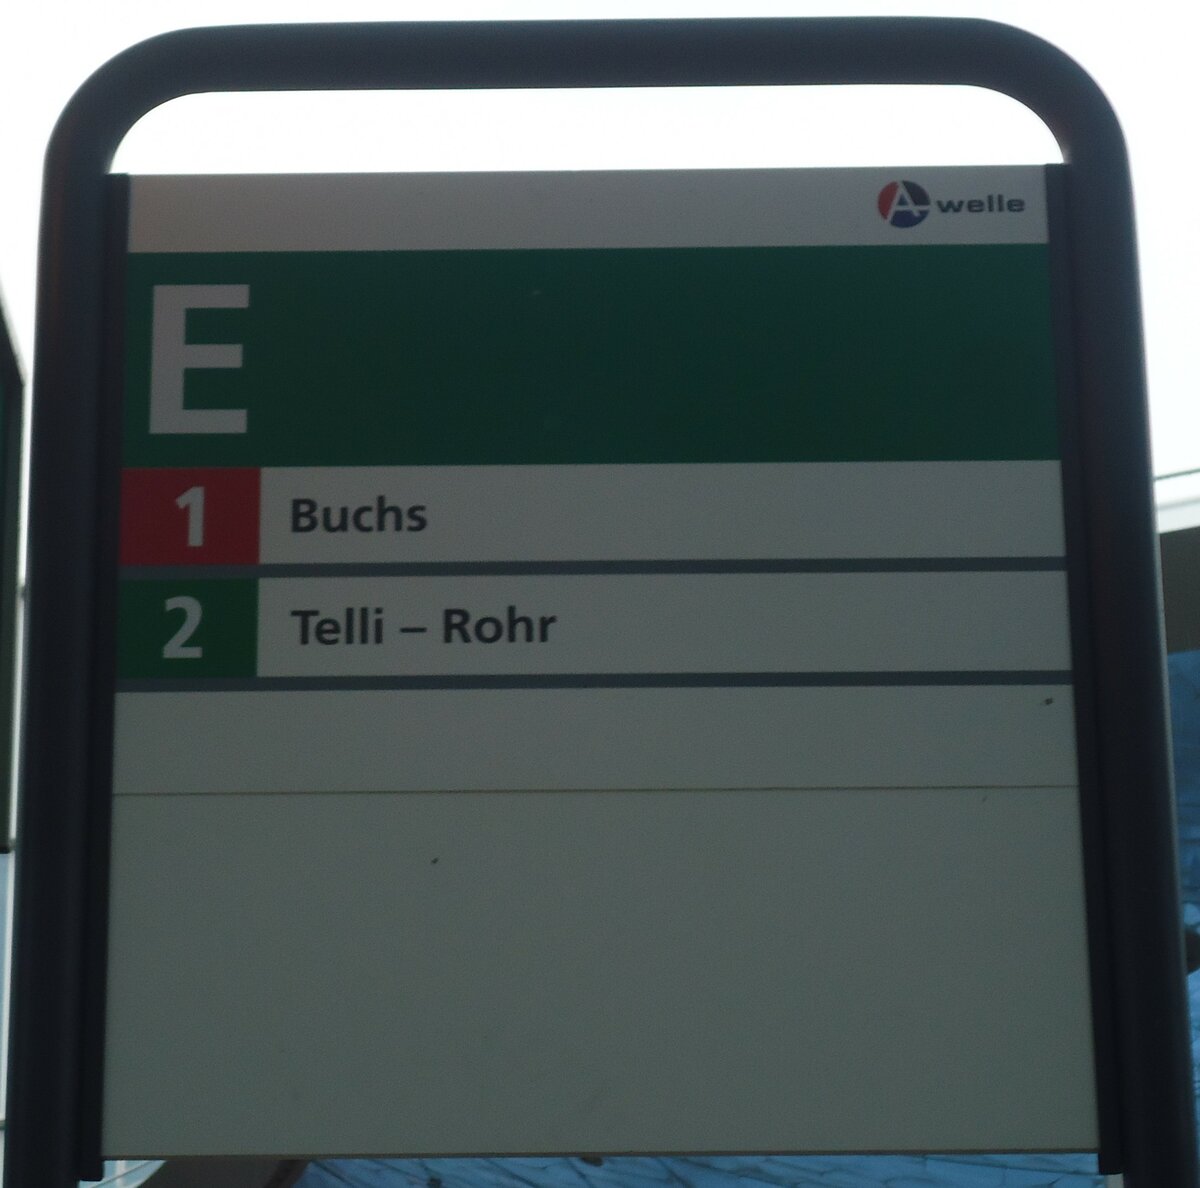 (748'491) - A-welle-Haltestellenschild - Aarau, Bahnhof - am 26. Dezember 2013